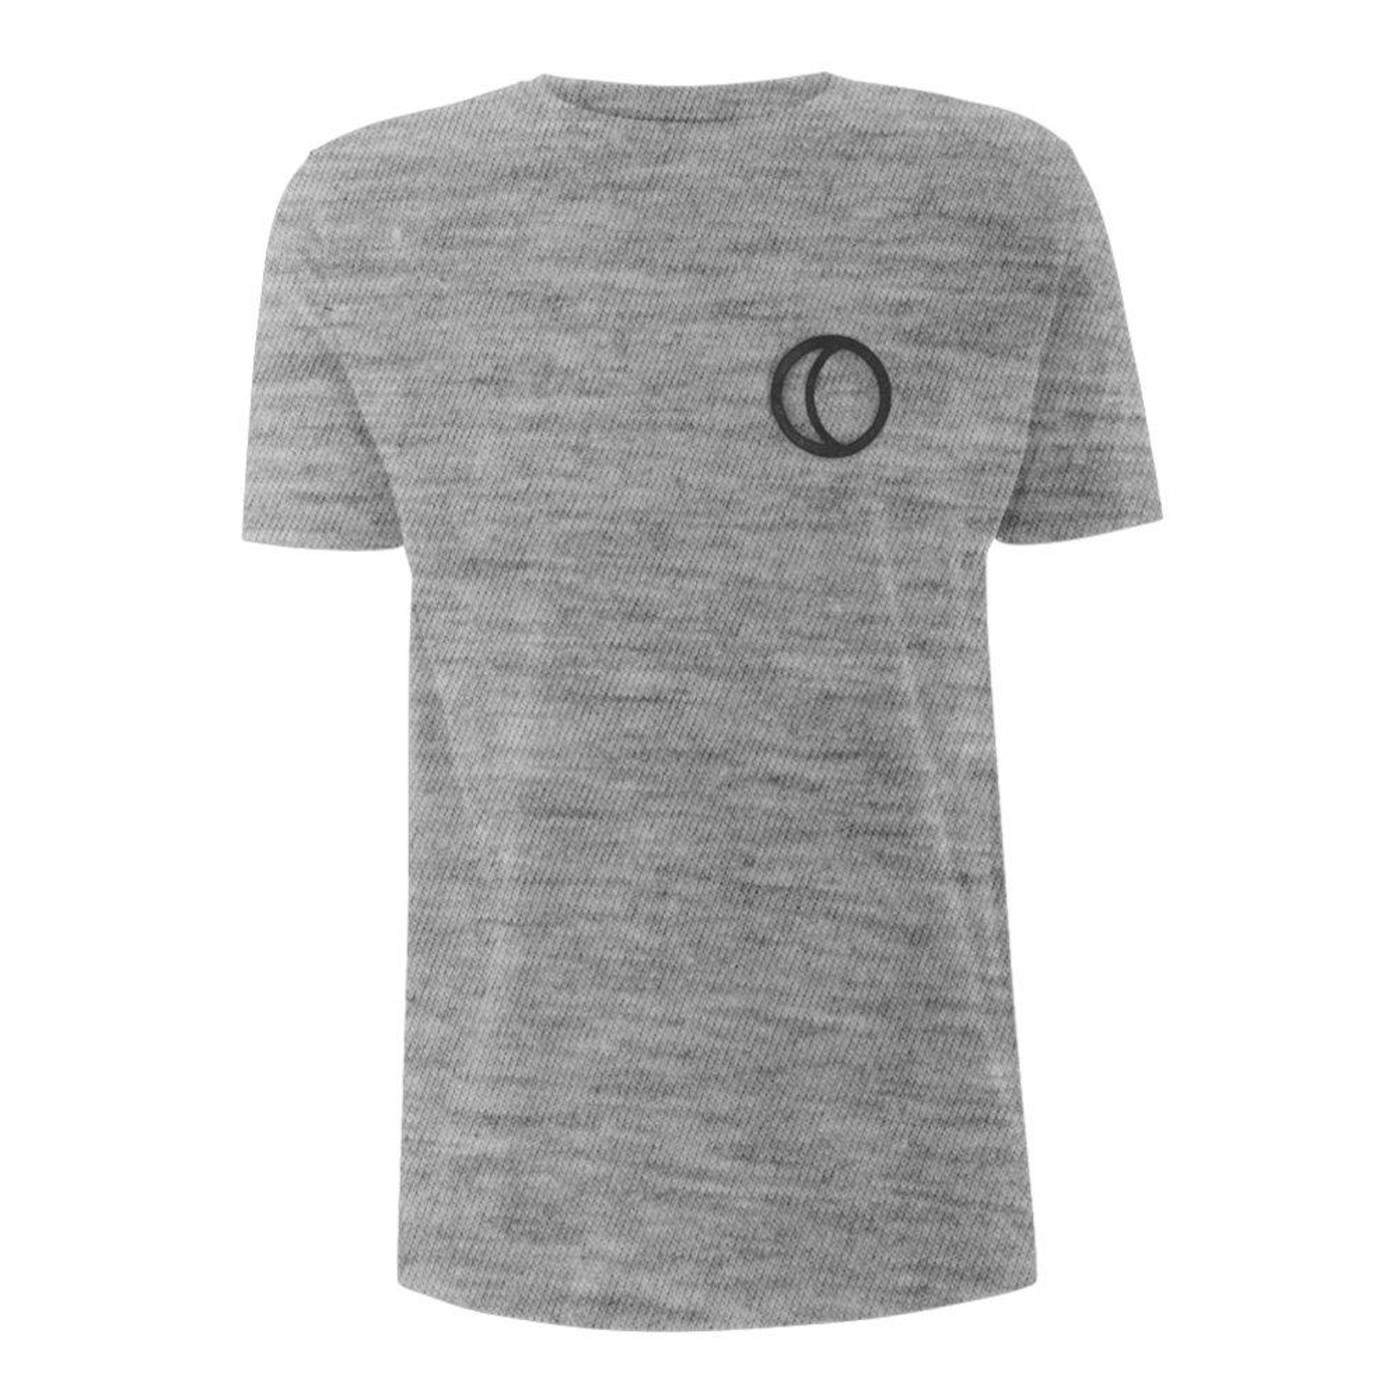 You Me At Six YMAS Logo/Raise a Glass Grey T-shirt